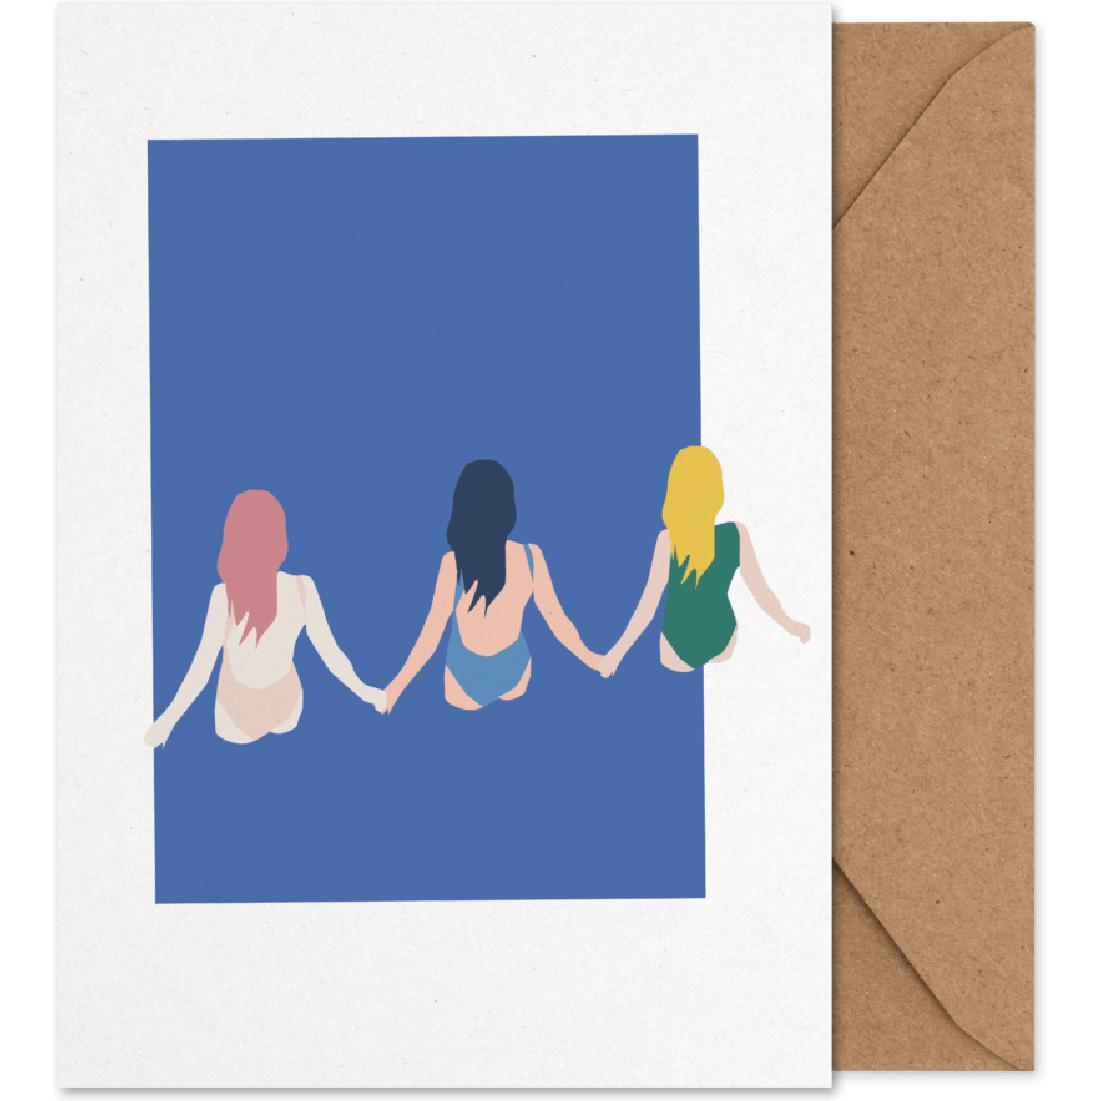 Tarjeta de arte de chicas colectivas de papel